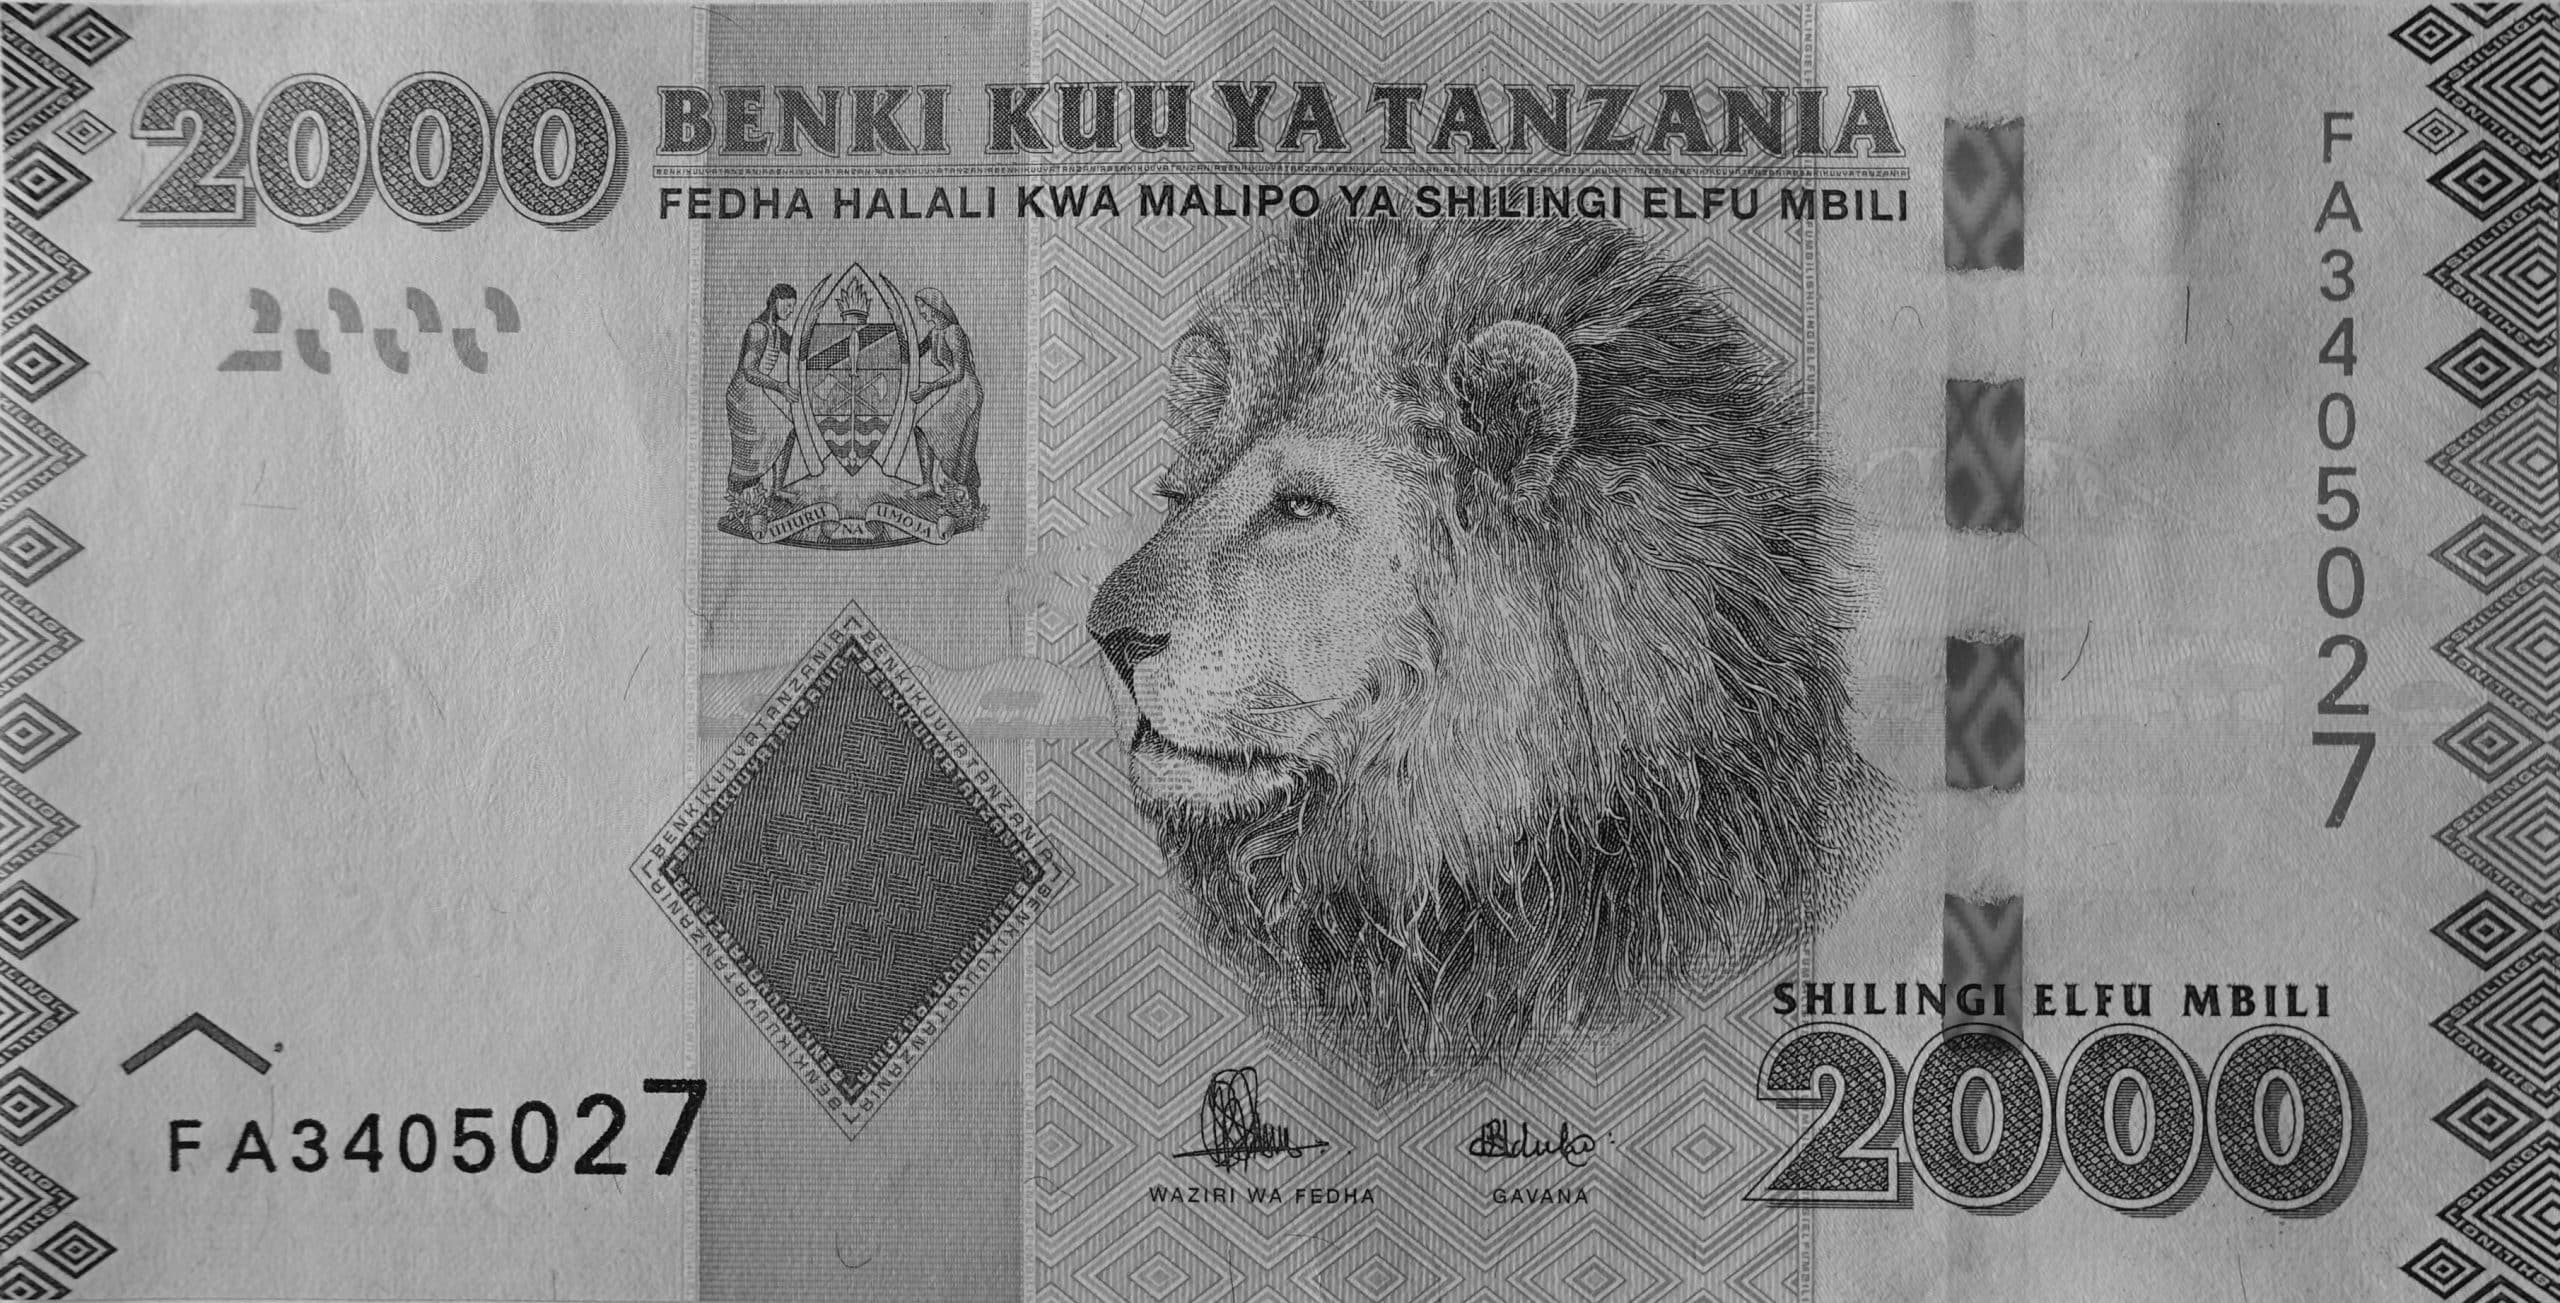 2000 Tanzania Shilling Front